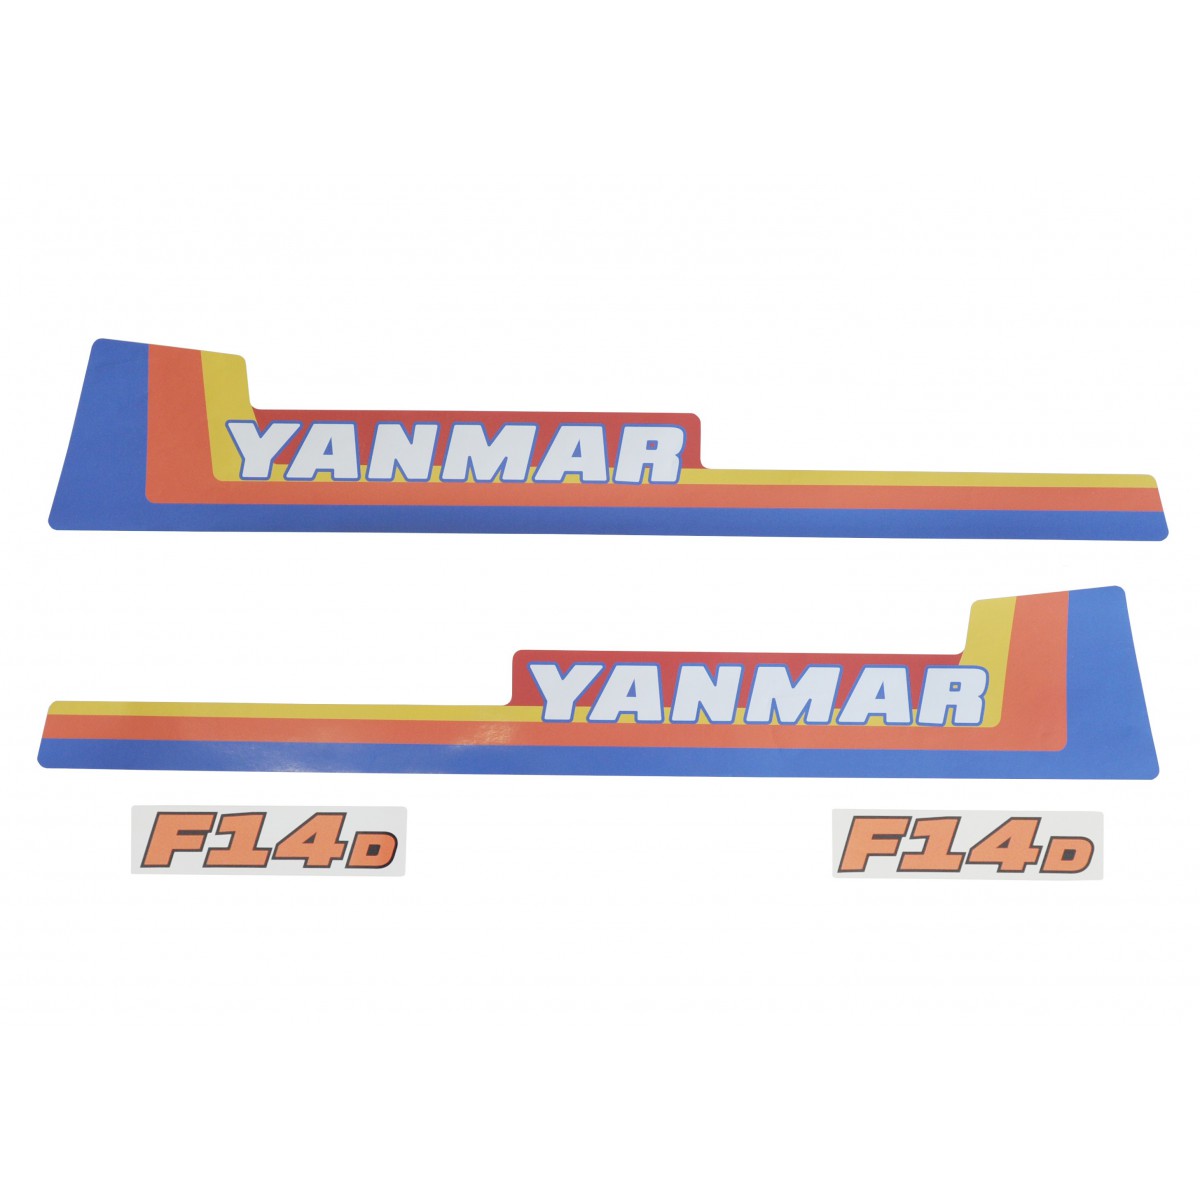 Autocollants Yanmar F14D